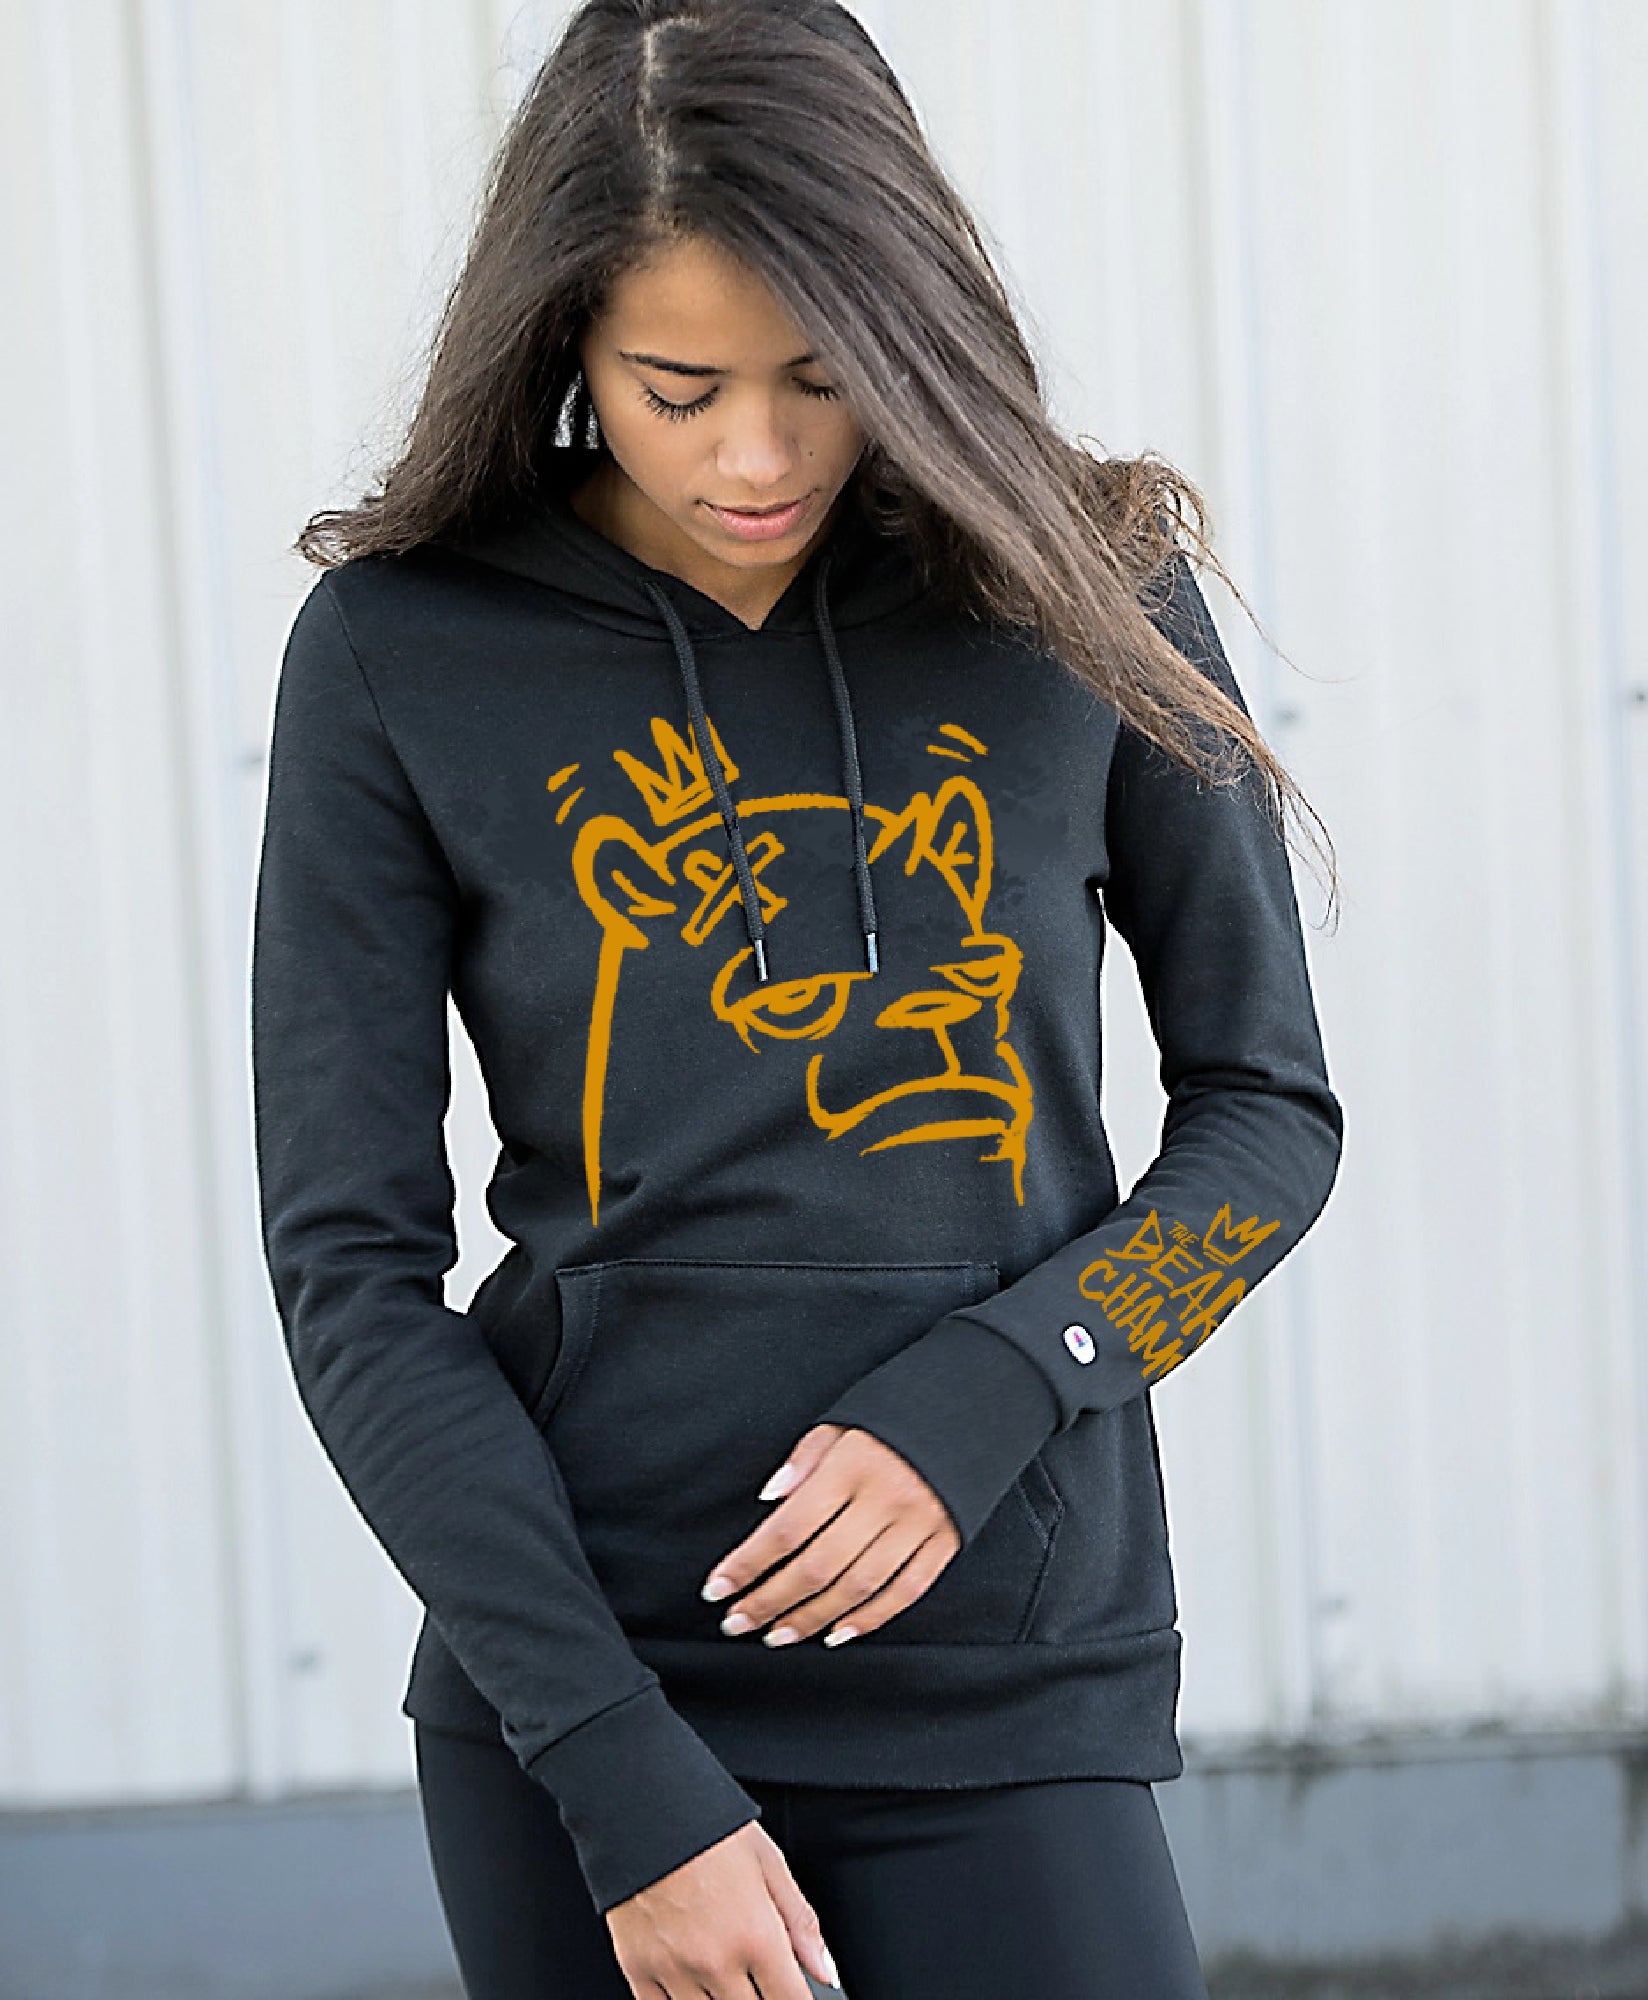 "Tagged Up (Gold)" Sweatshirt by JC Rivera